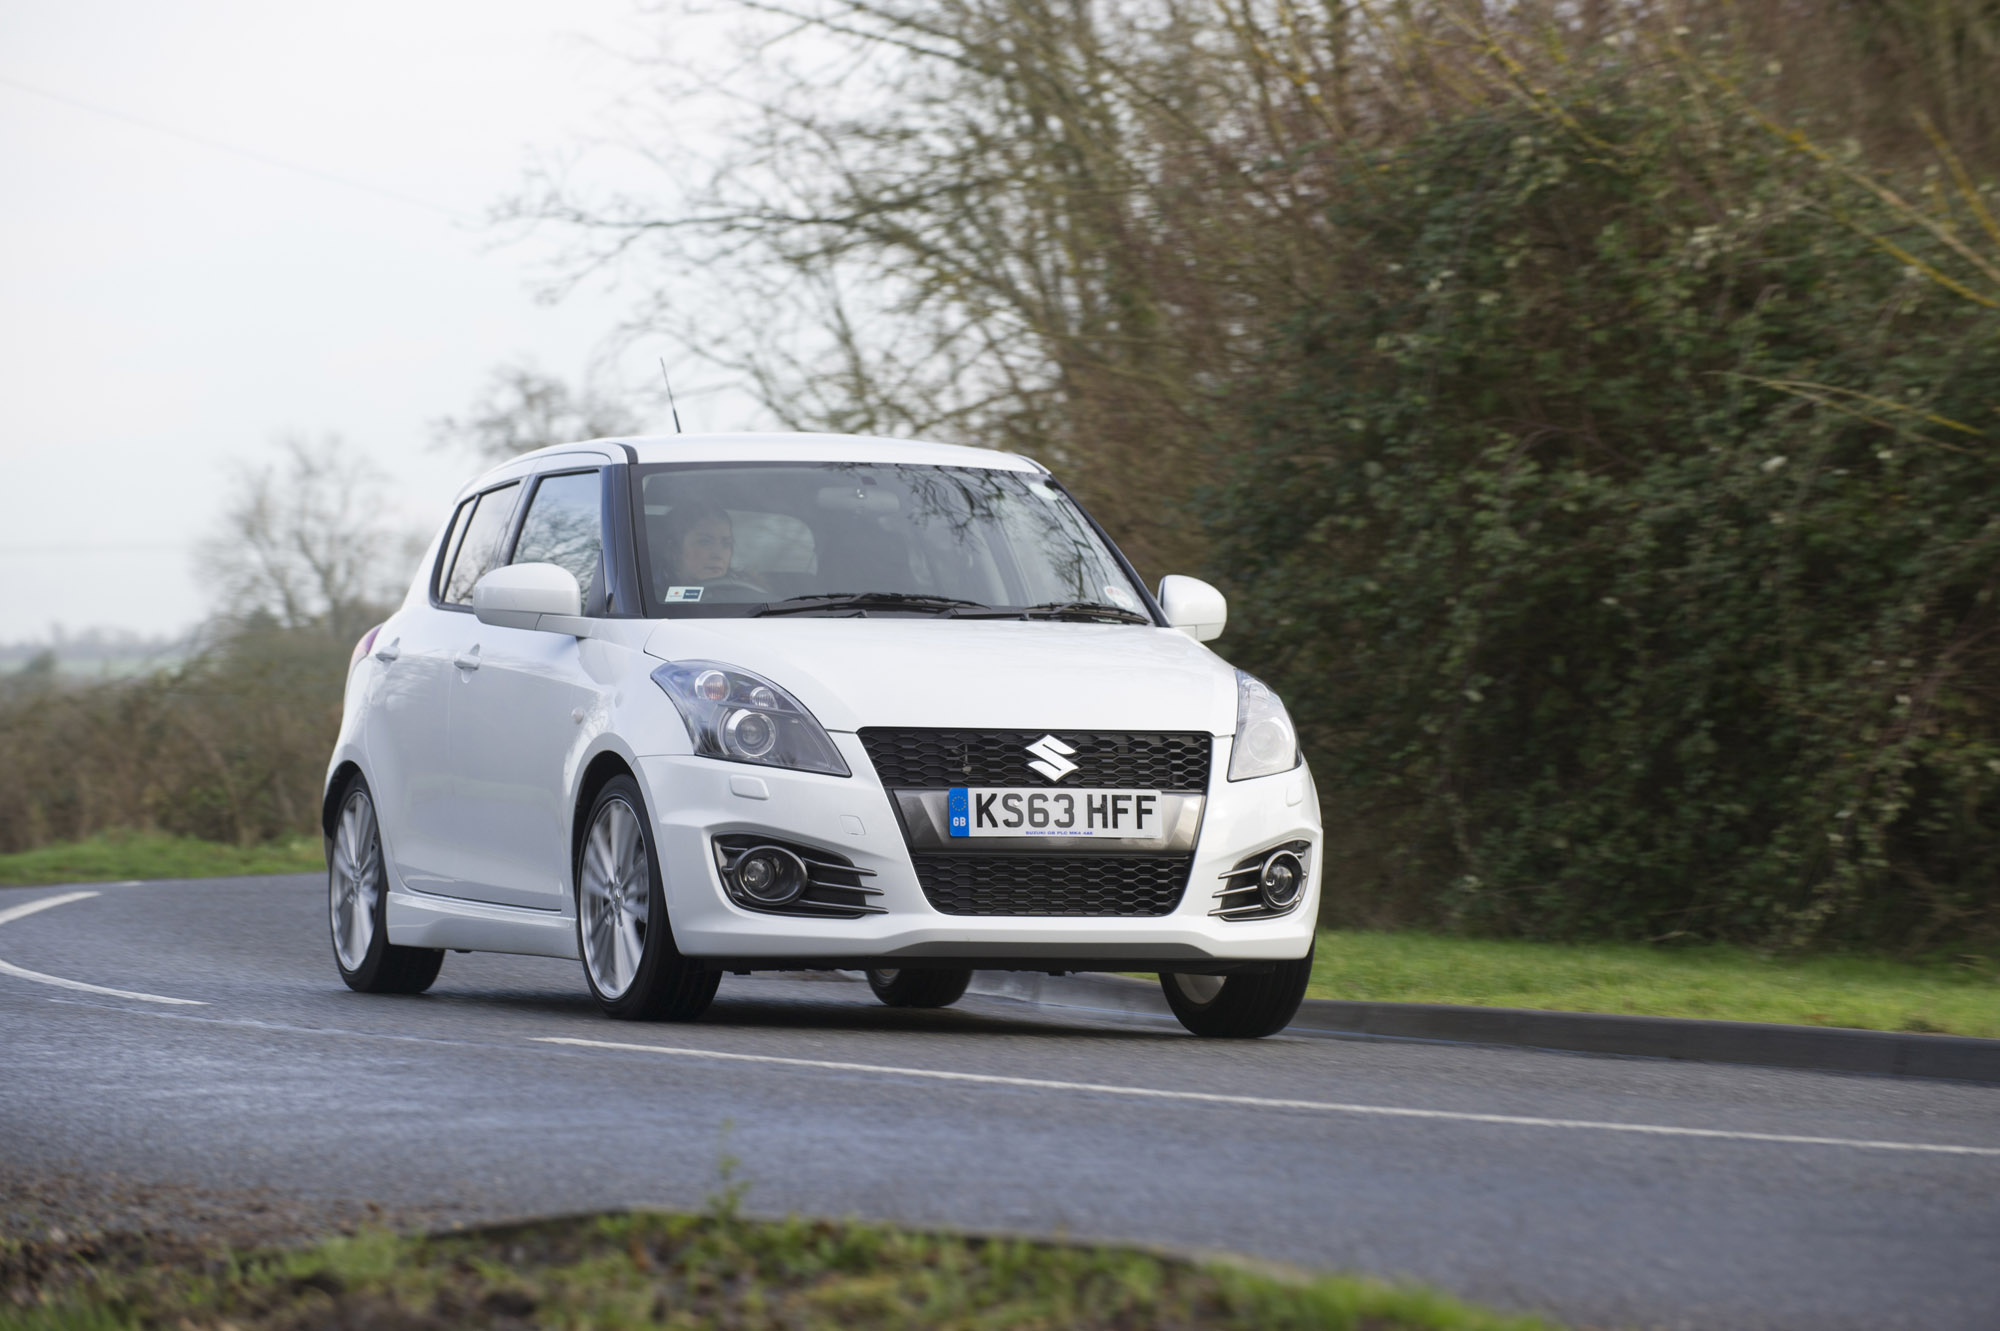  Car Reviews - The Suzuki Swift Sport Hybrid Review